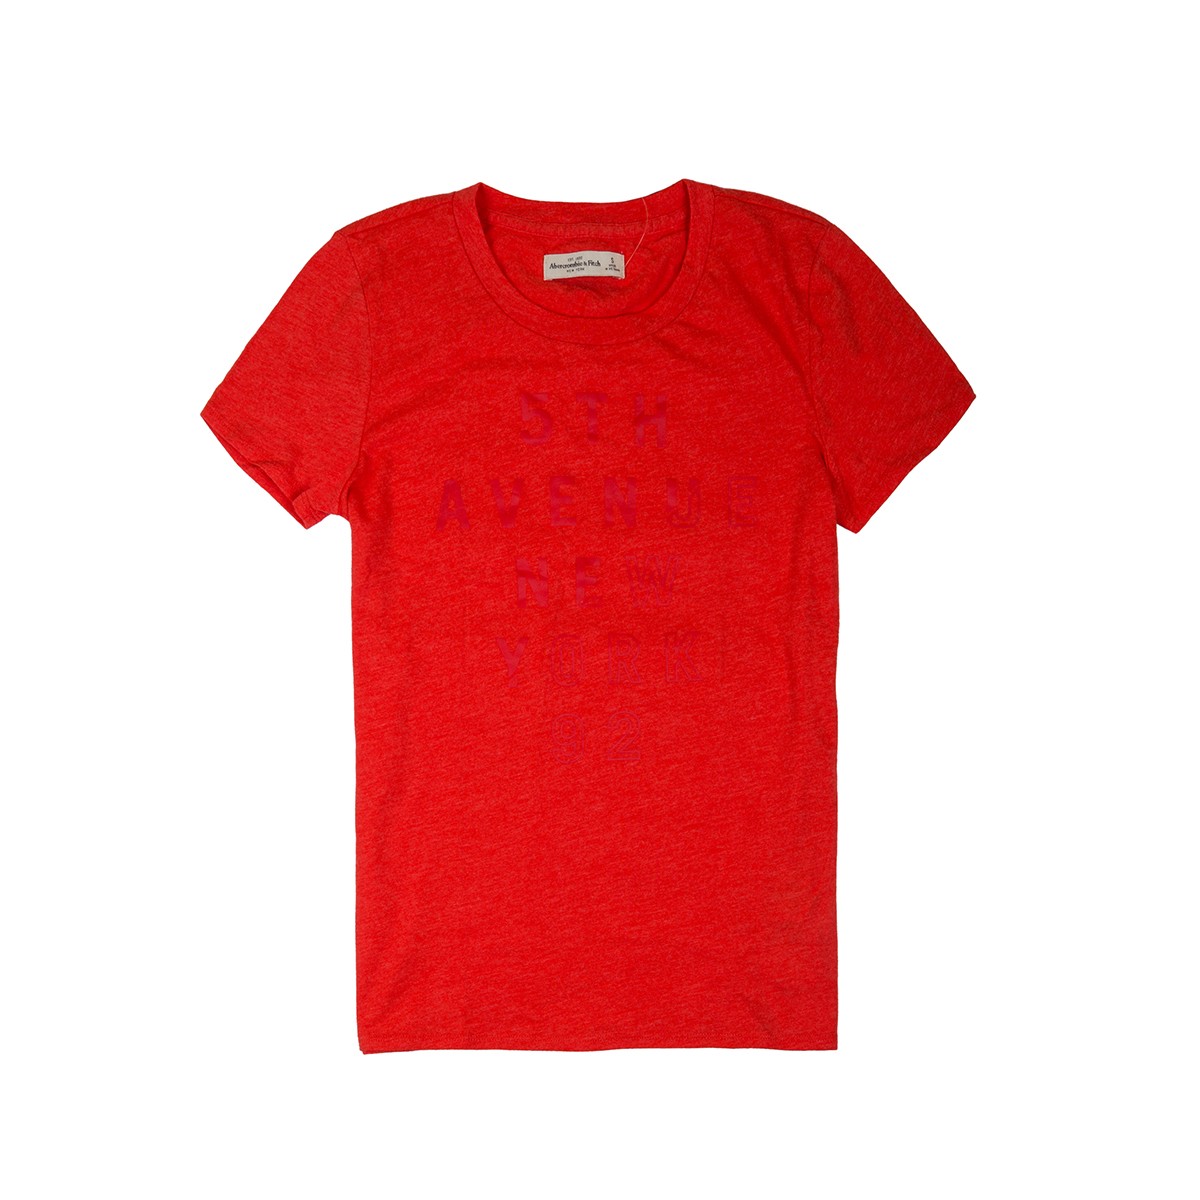 Красная футболка - женская футболка Abercrombie & Fitch, XS, XS